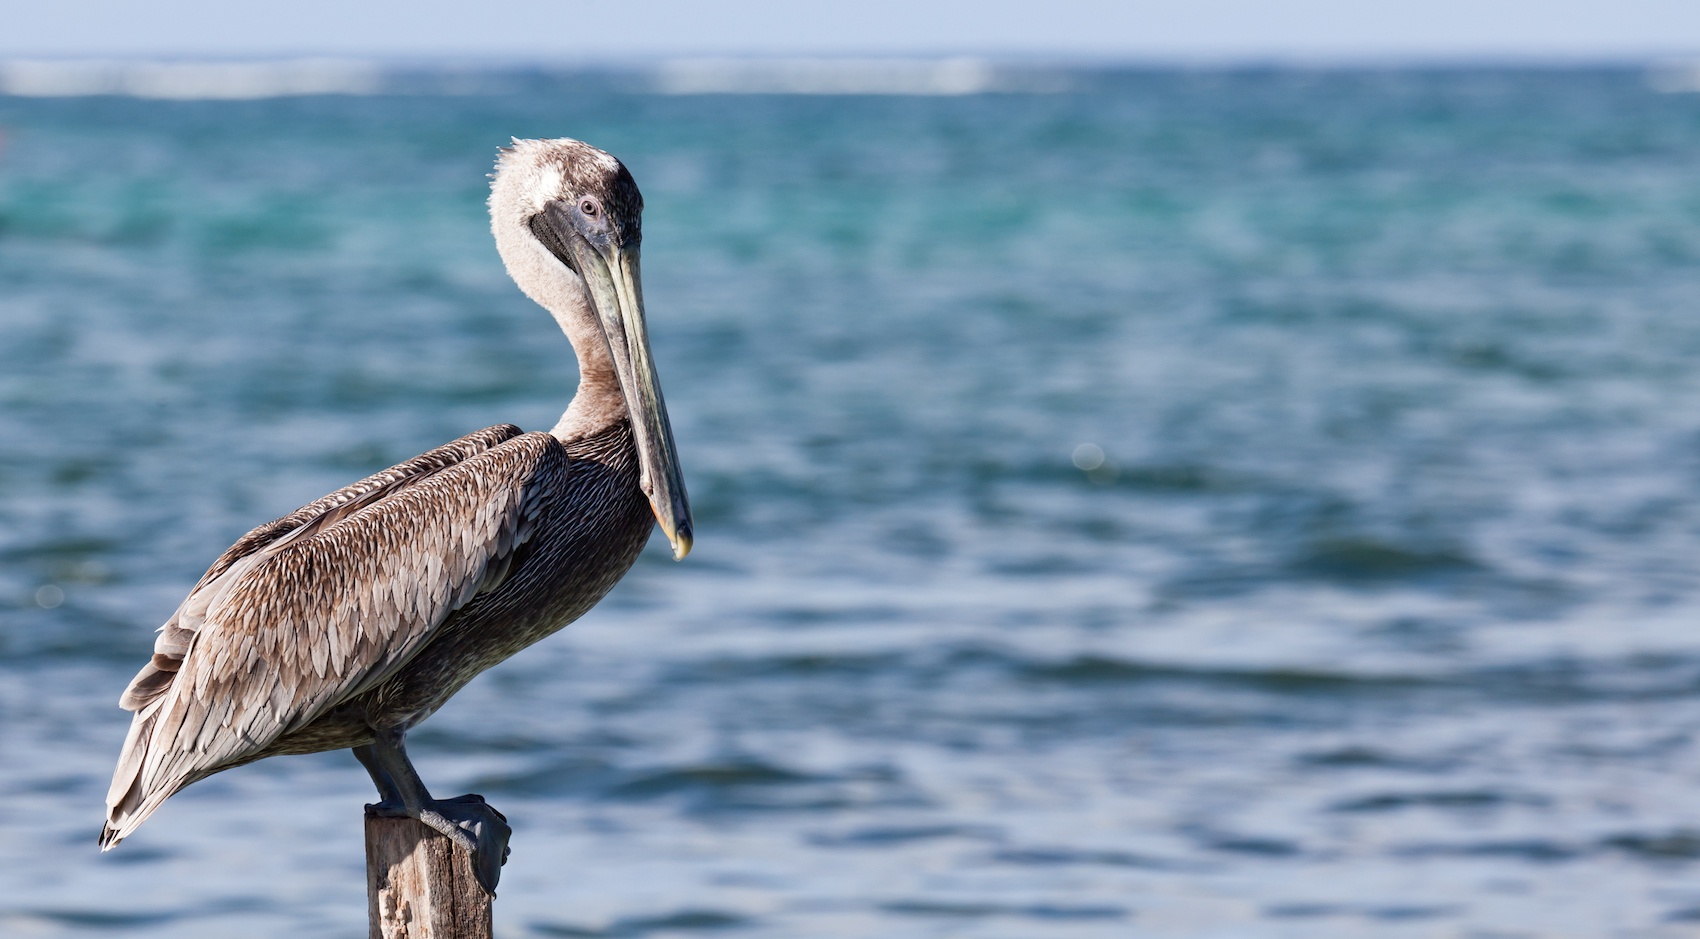 Pelican on dock in front of water 